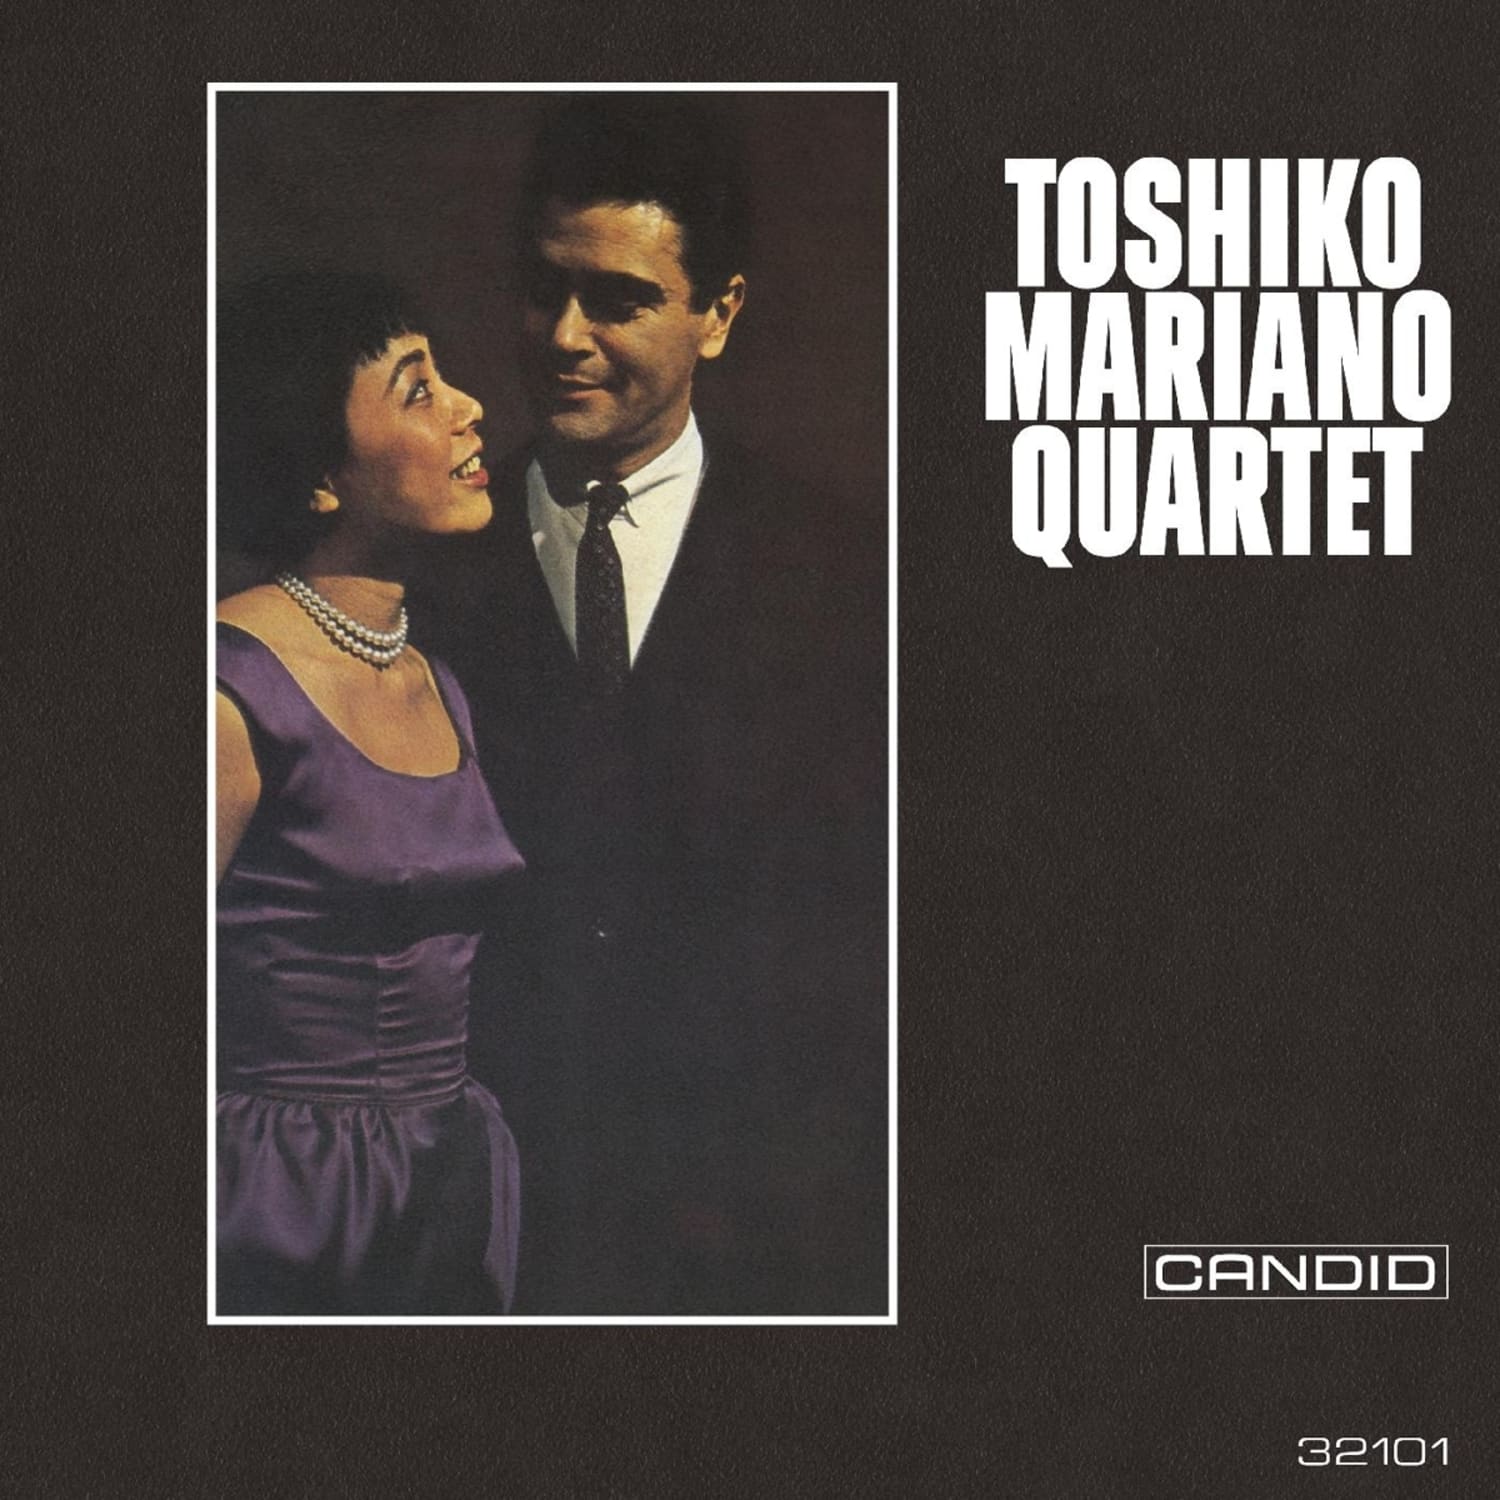  Toshiko-Quartet- Mariano - TOSHIKO MARIANO QUARTET 